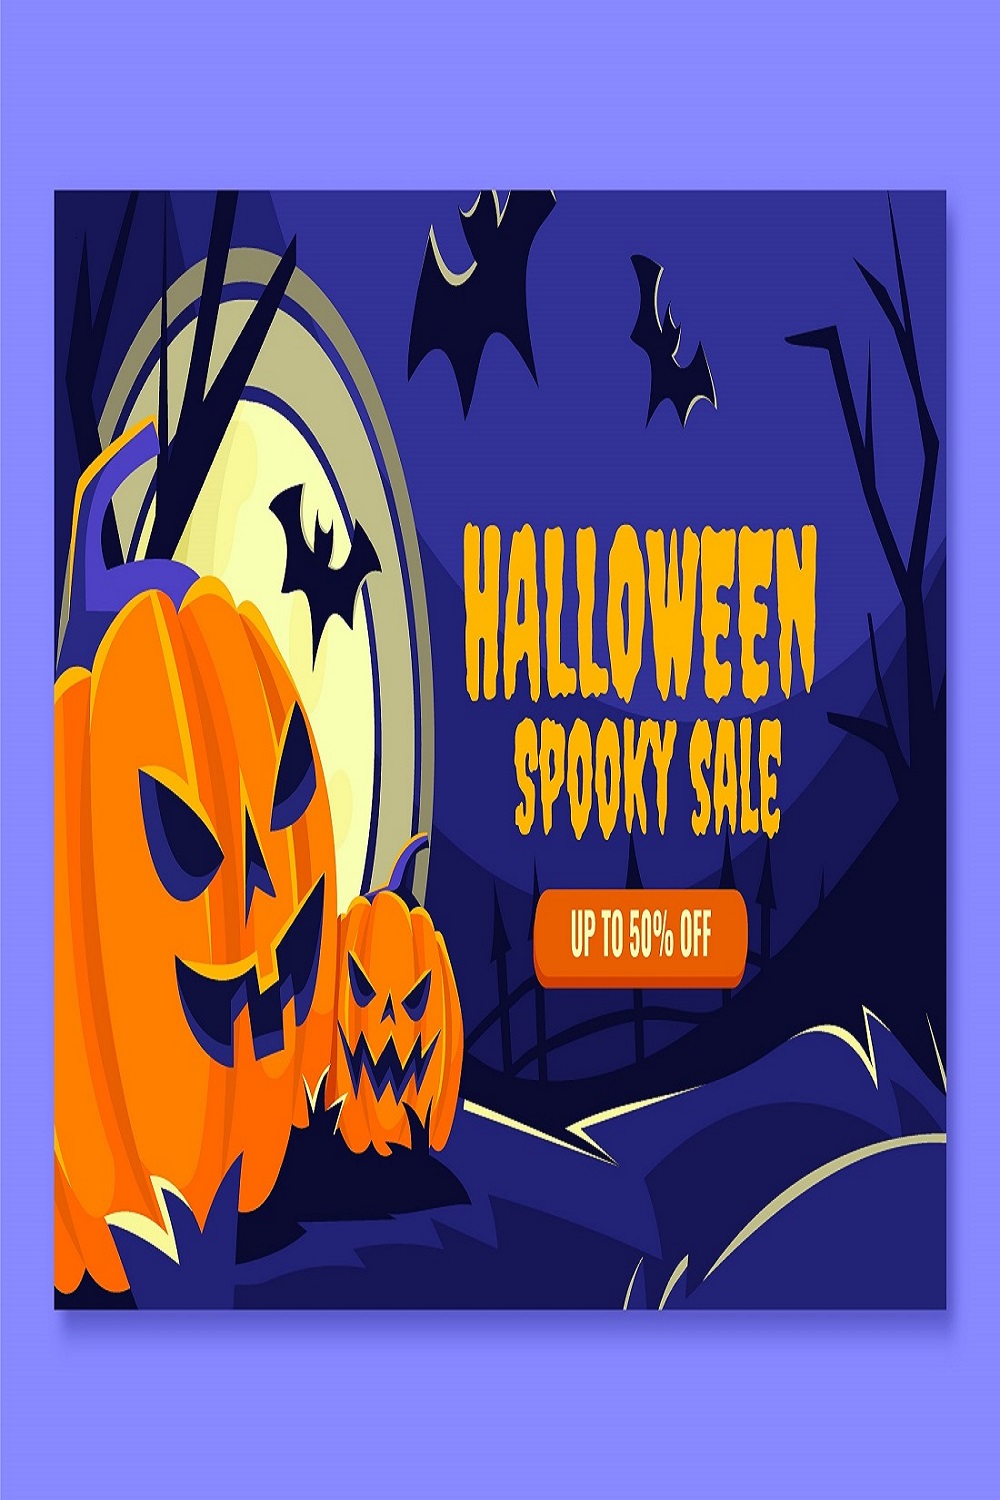 Halloween Spooky sale celebration pinterest preview image.